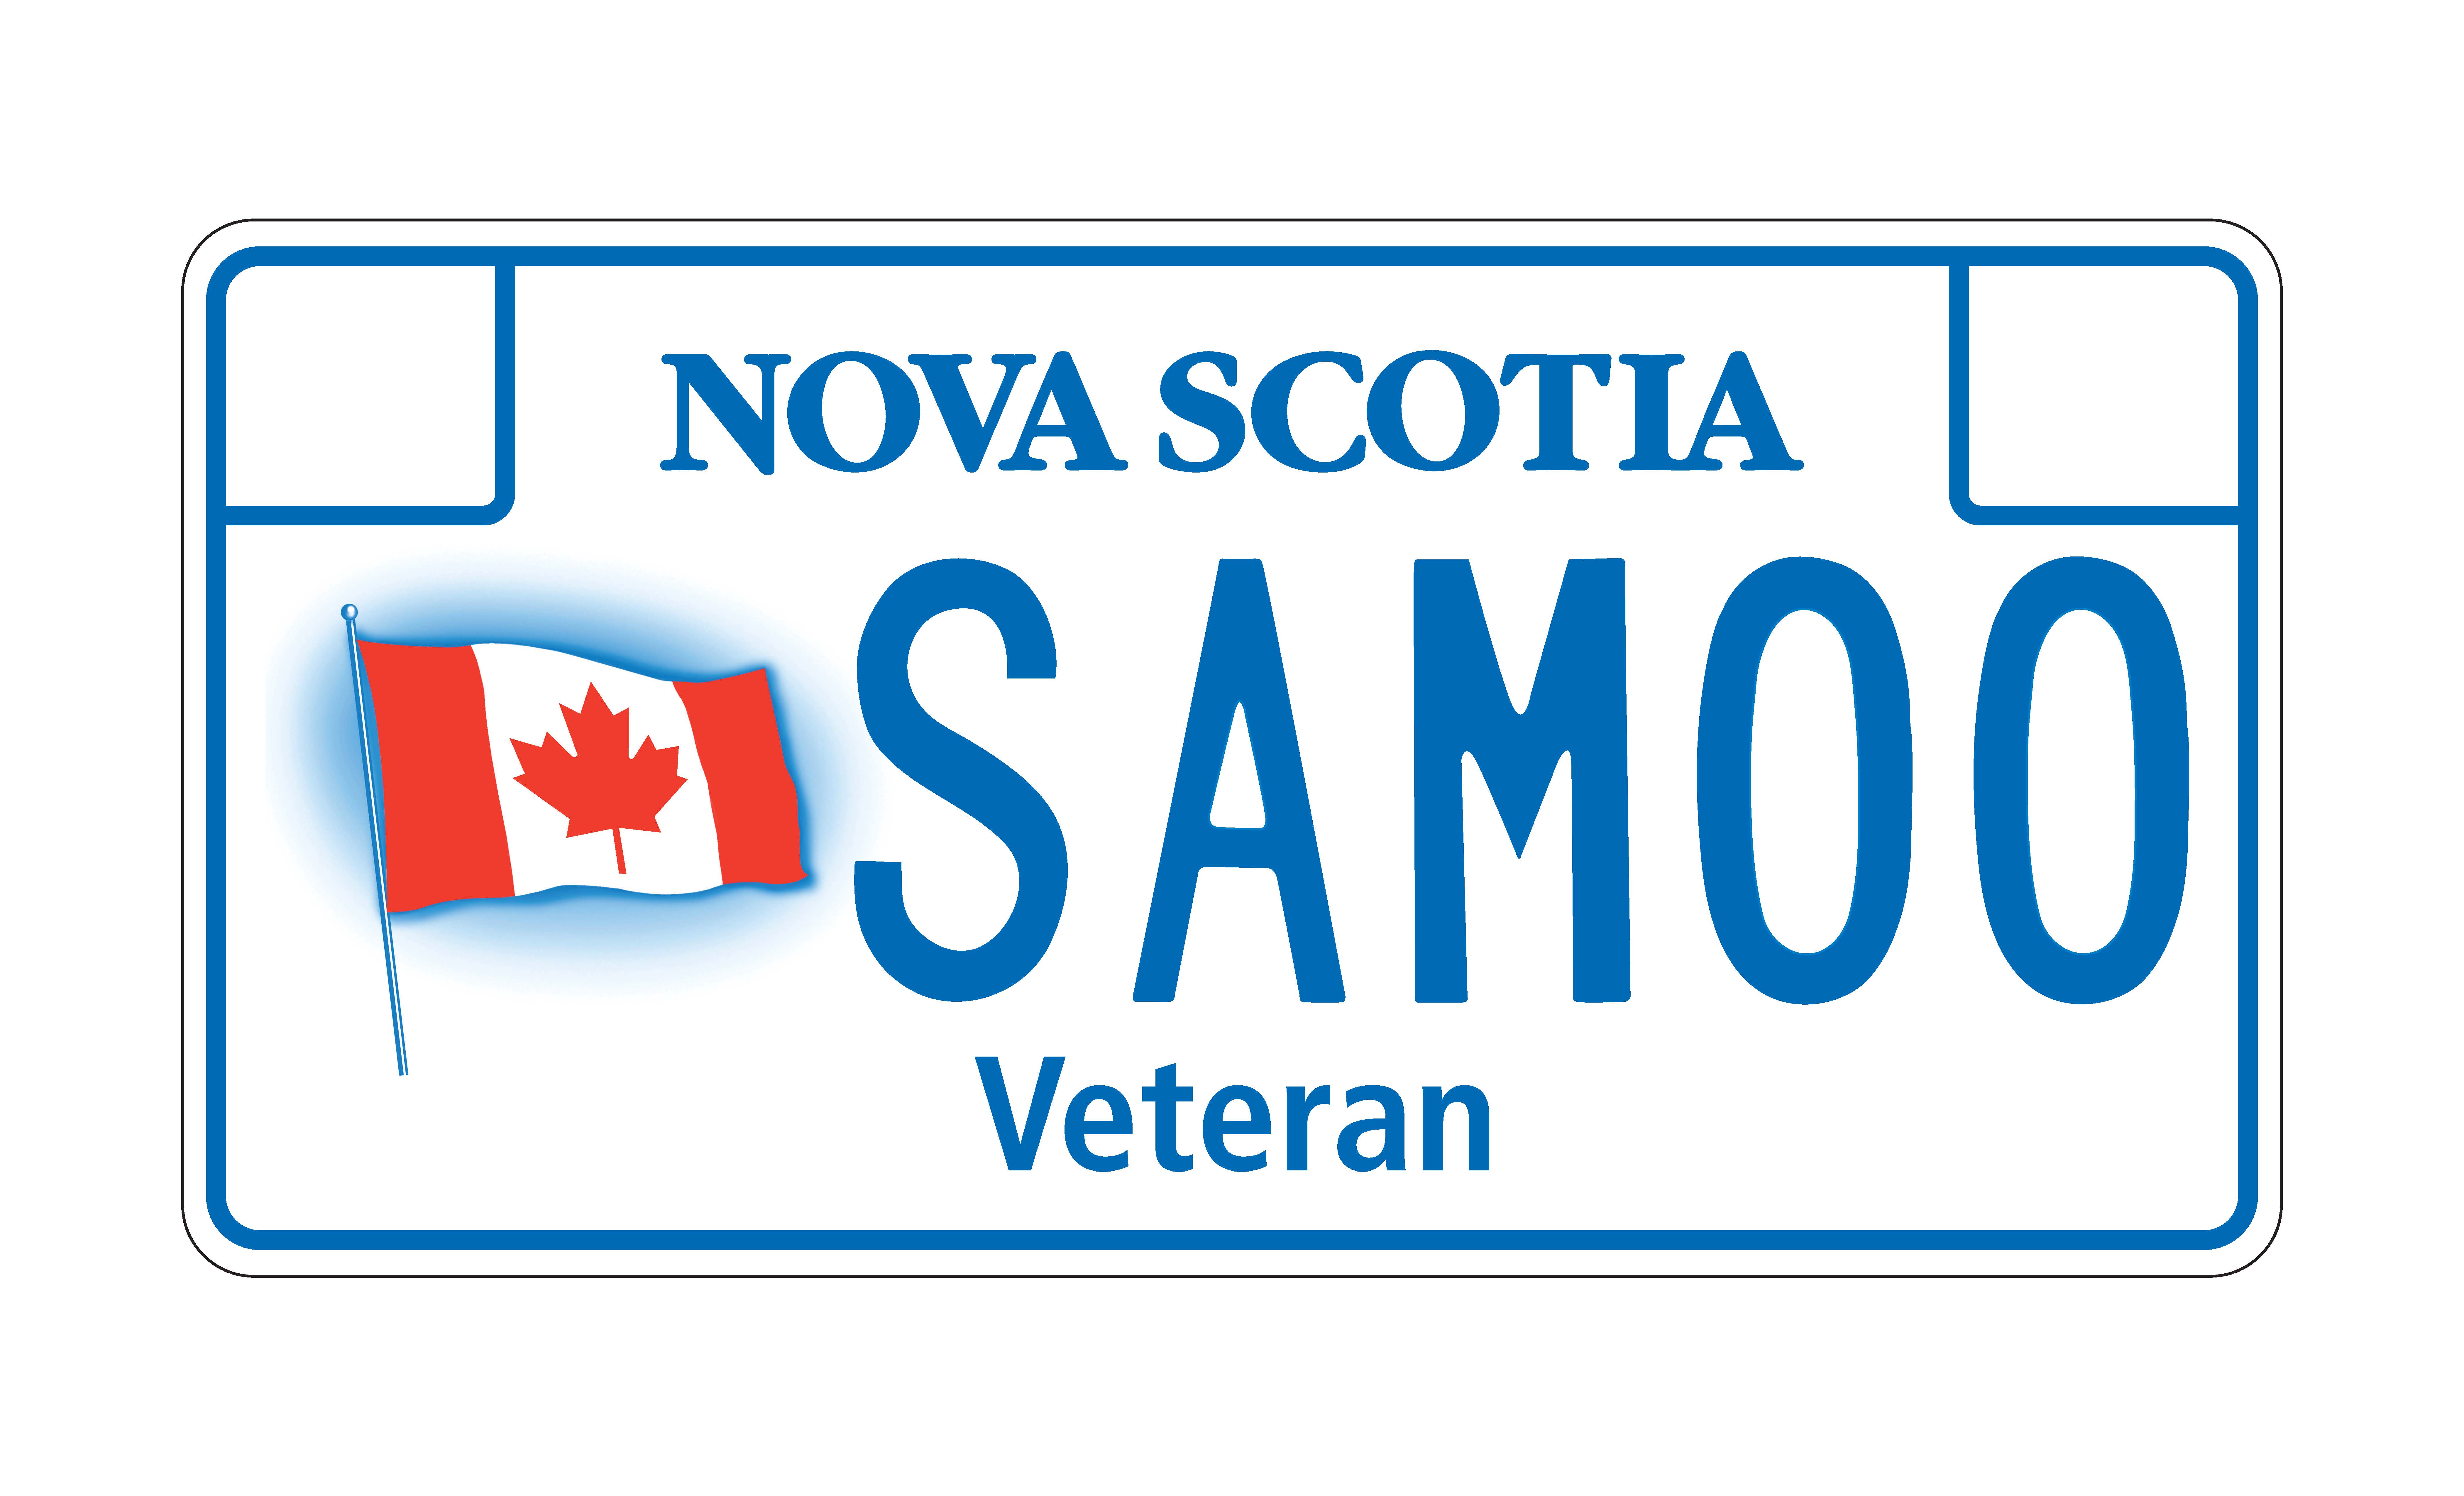 Veteran's number plate image